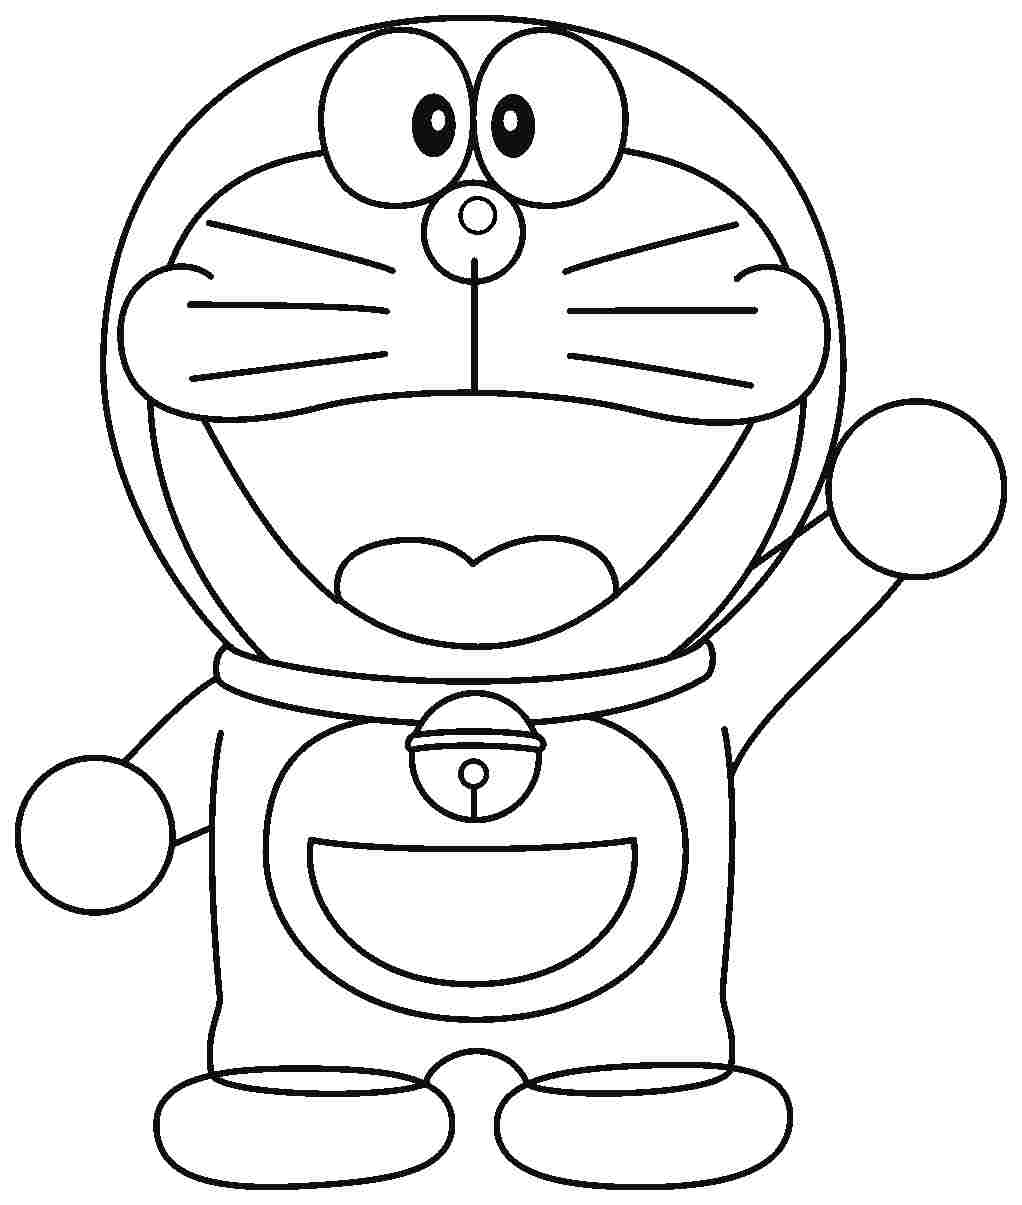 Doraemon Coloring Pages   Coloring Home